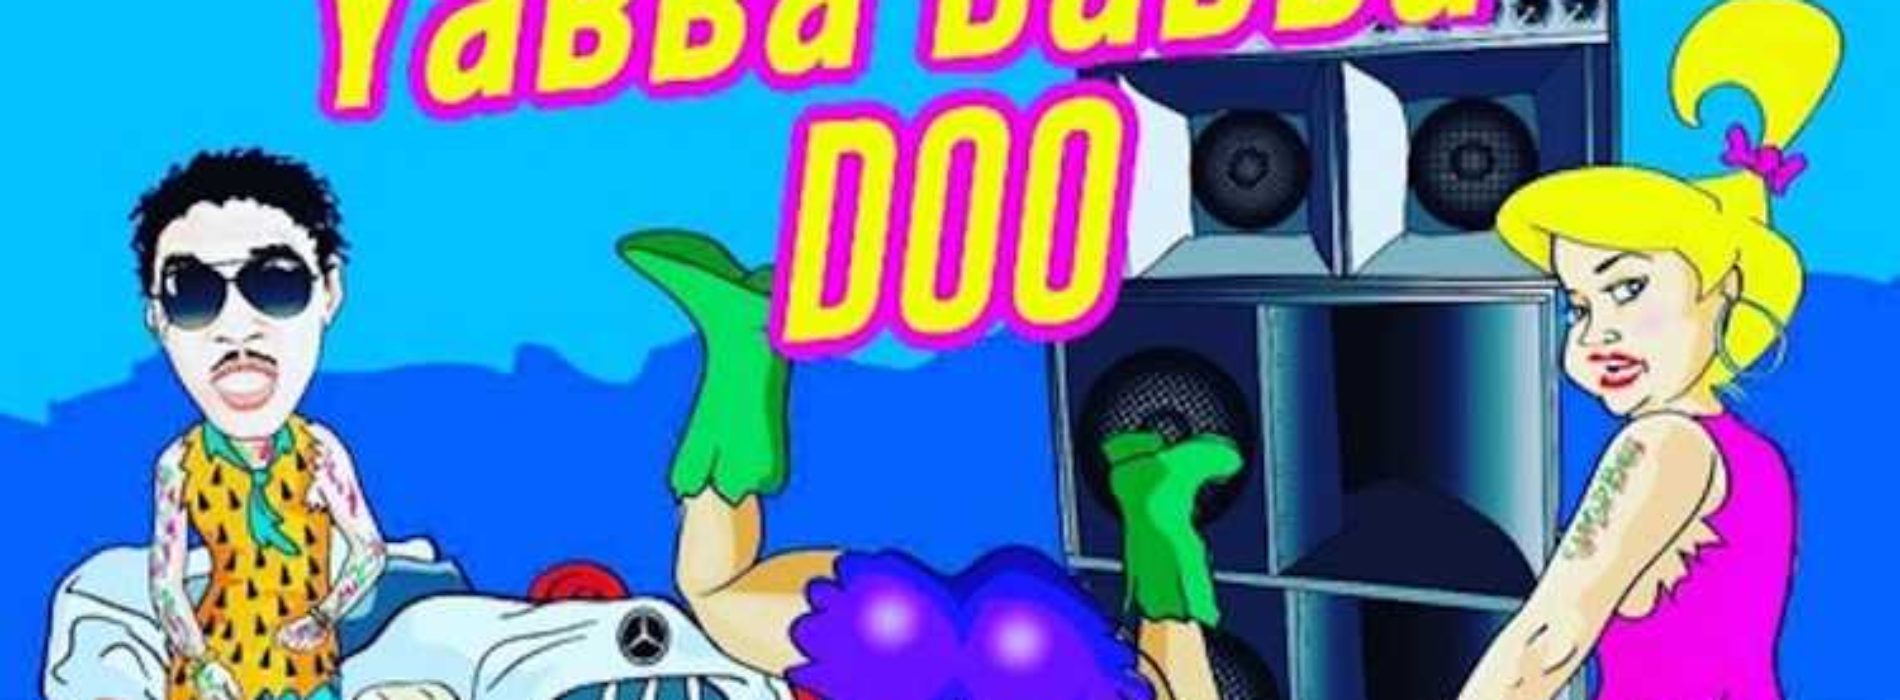 Vybz Kartel – Yabba Dabba Doo (Official Video) -Janvier 2018